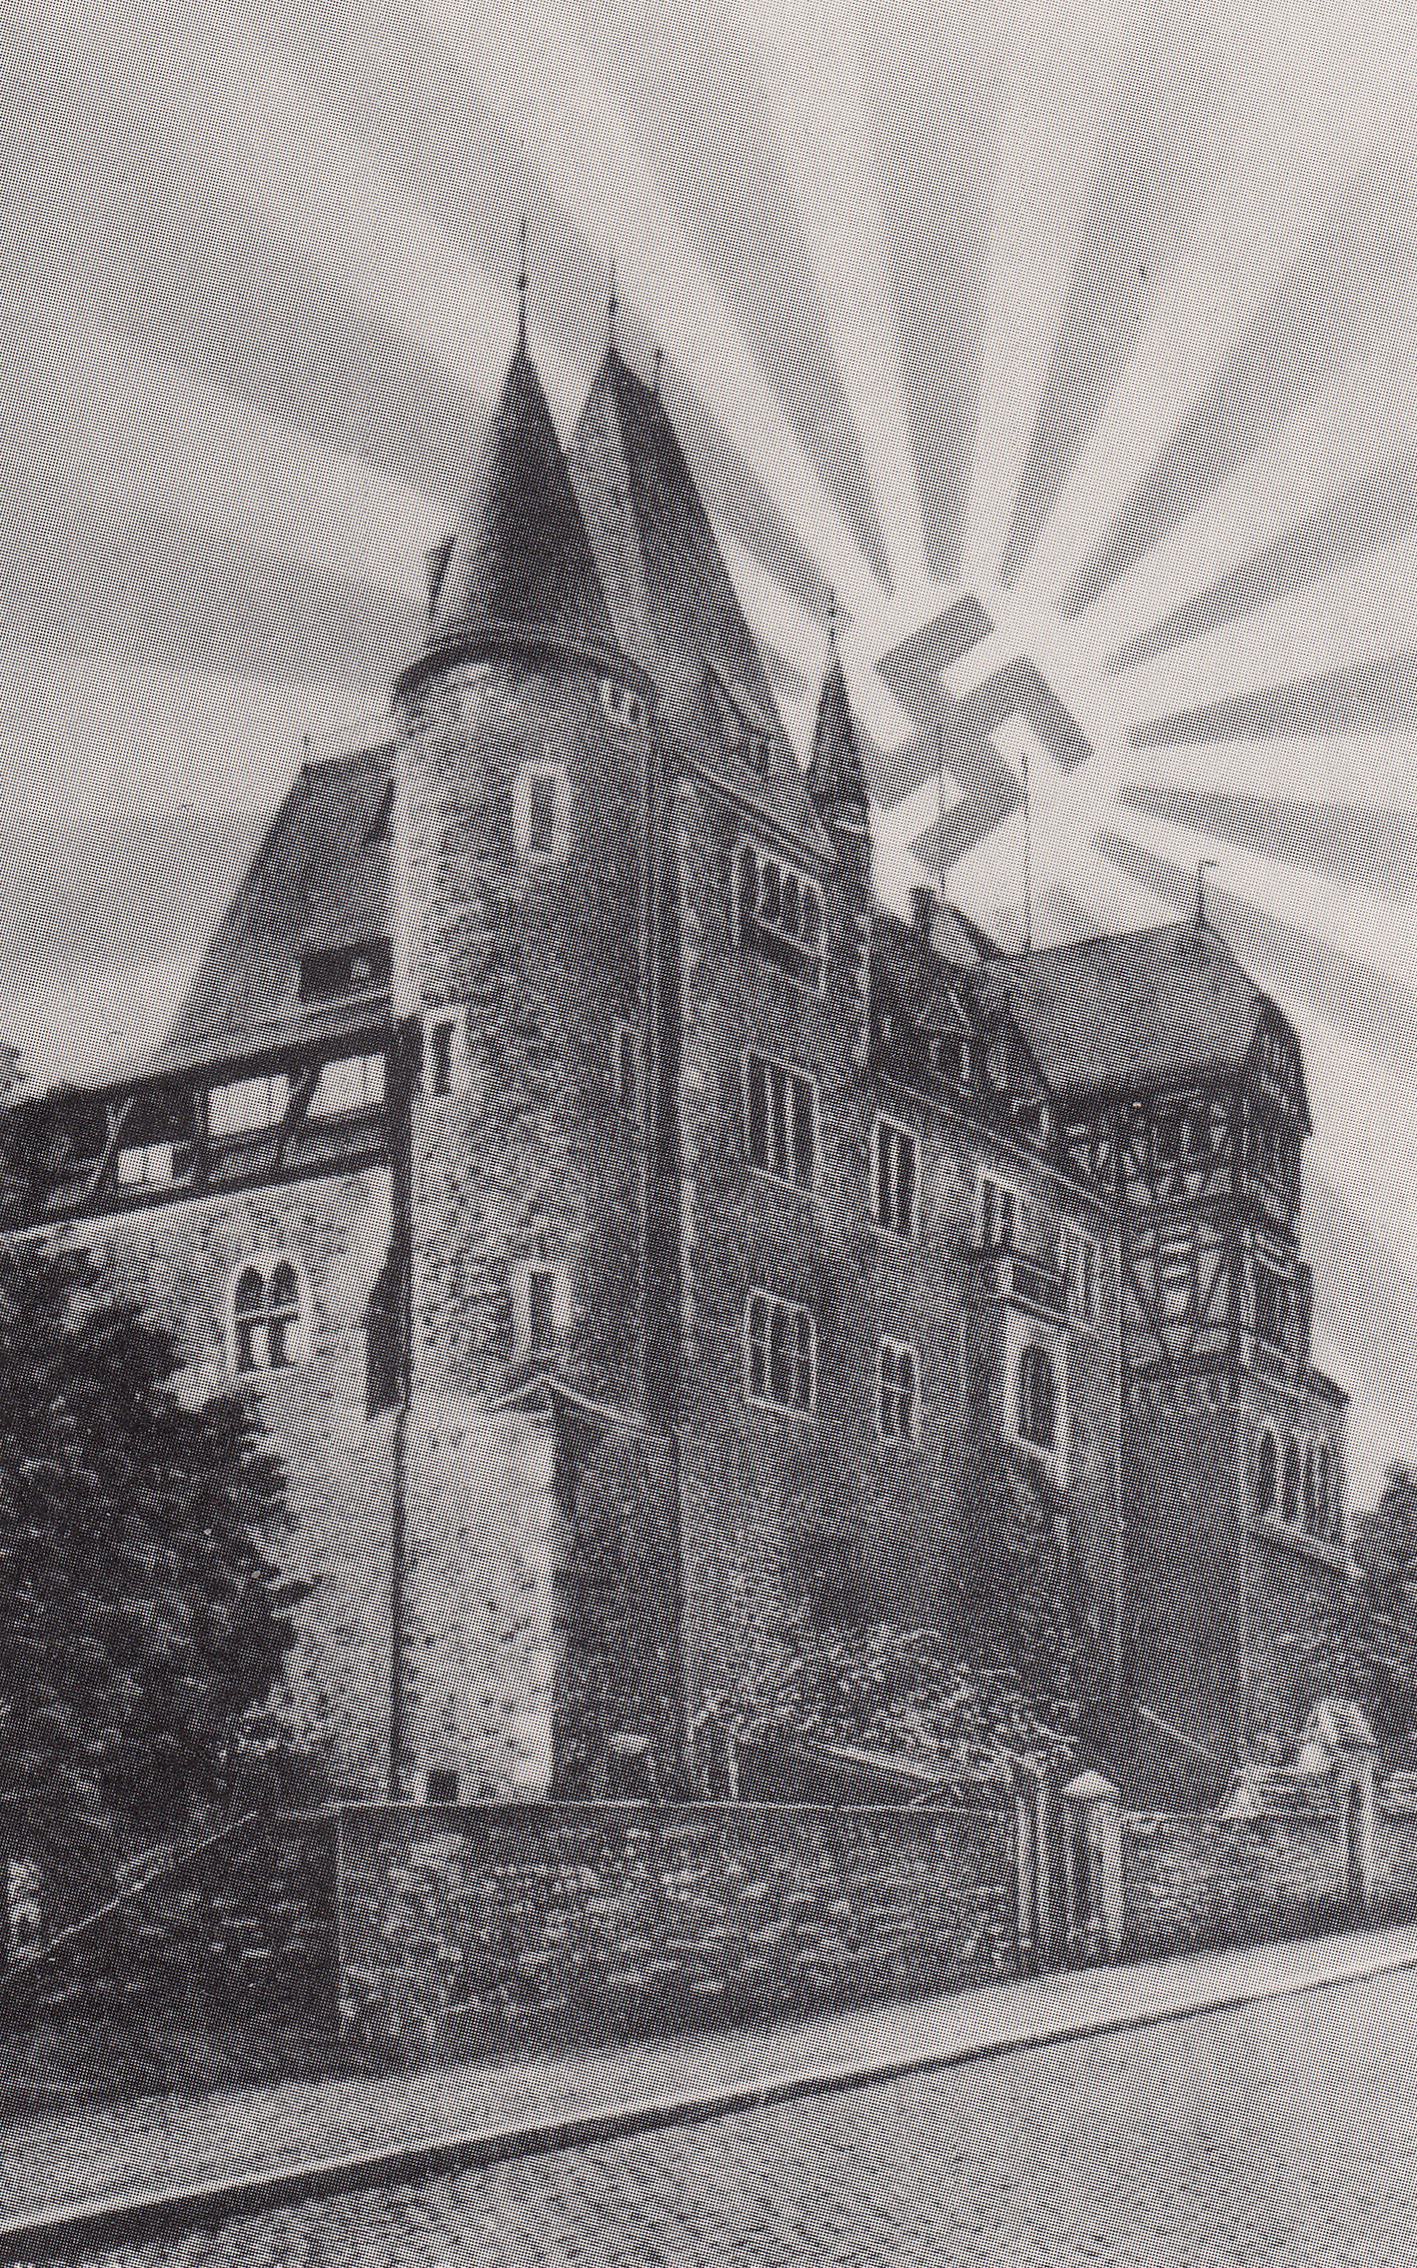 Propagandapostkarte des Alzeyer Schlosses.